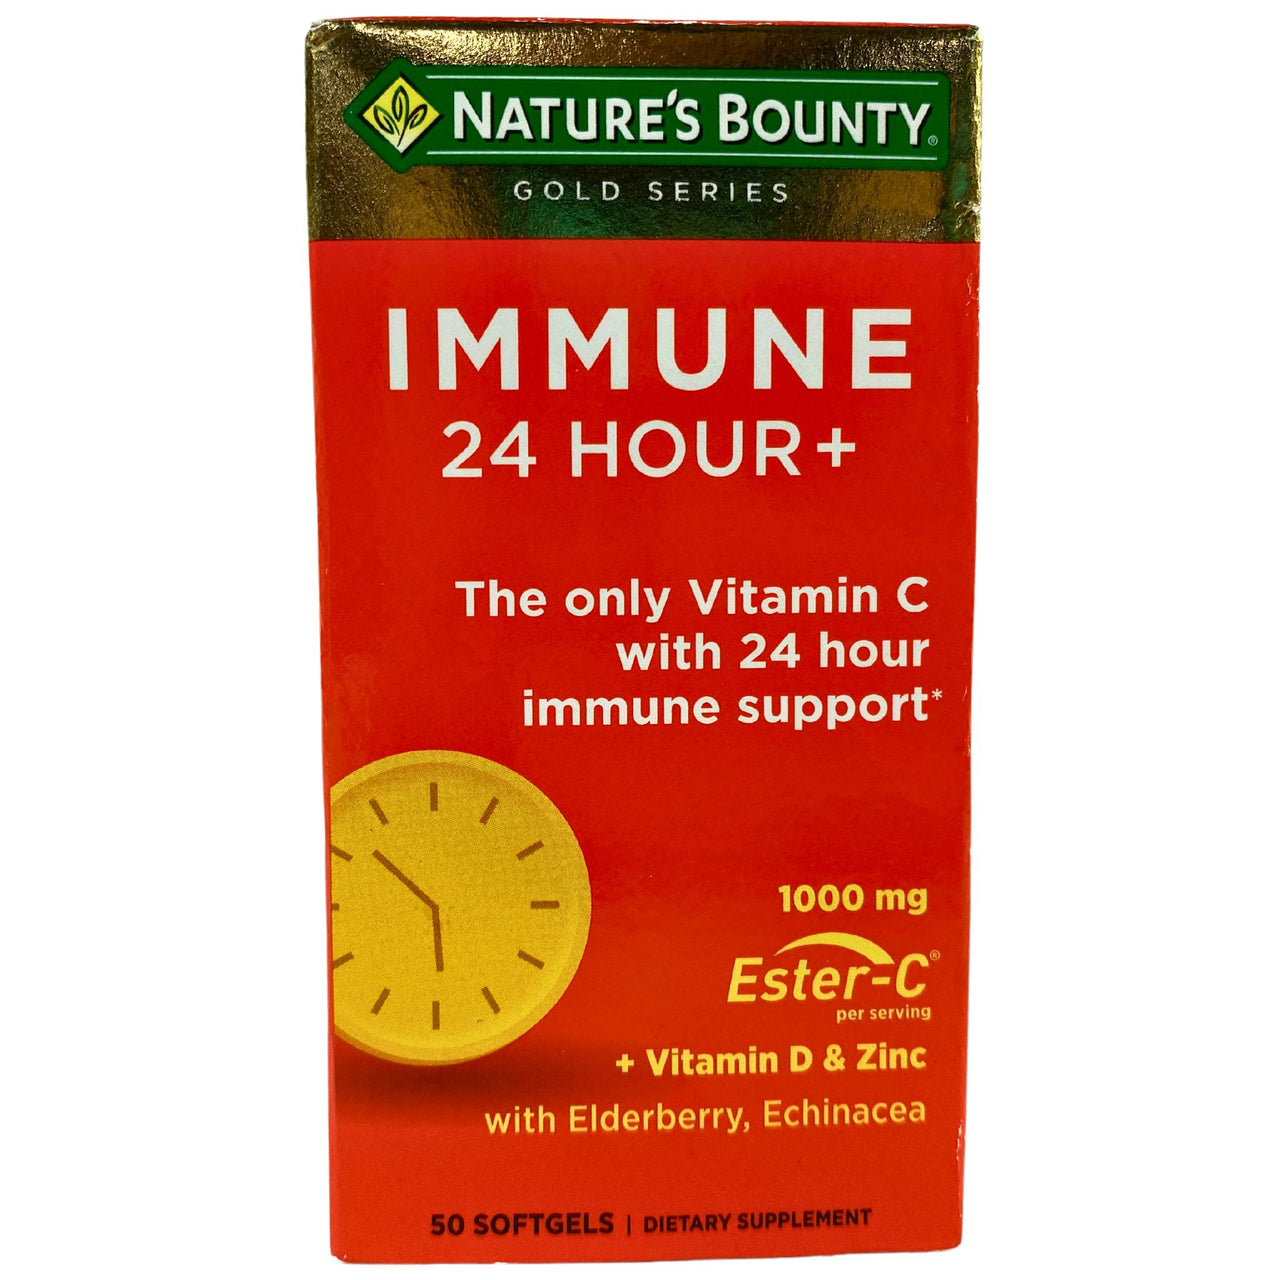 Nature's Bounty Gold Series Immune 24 hour